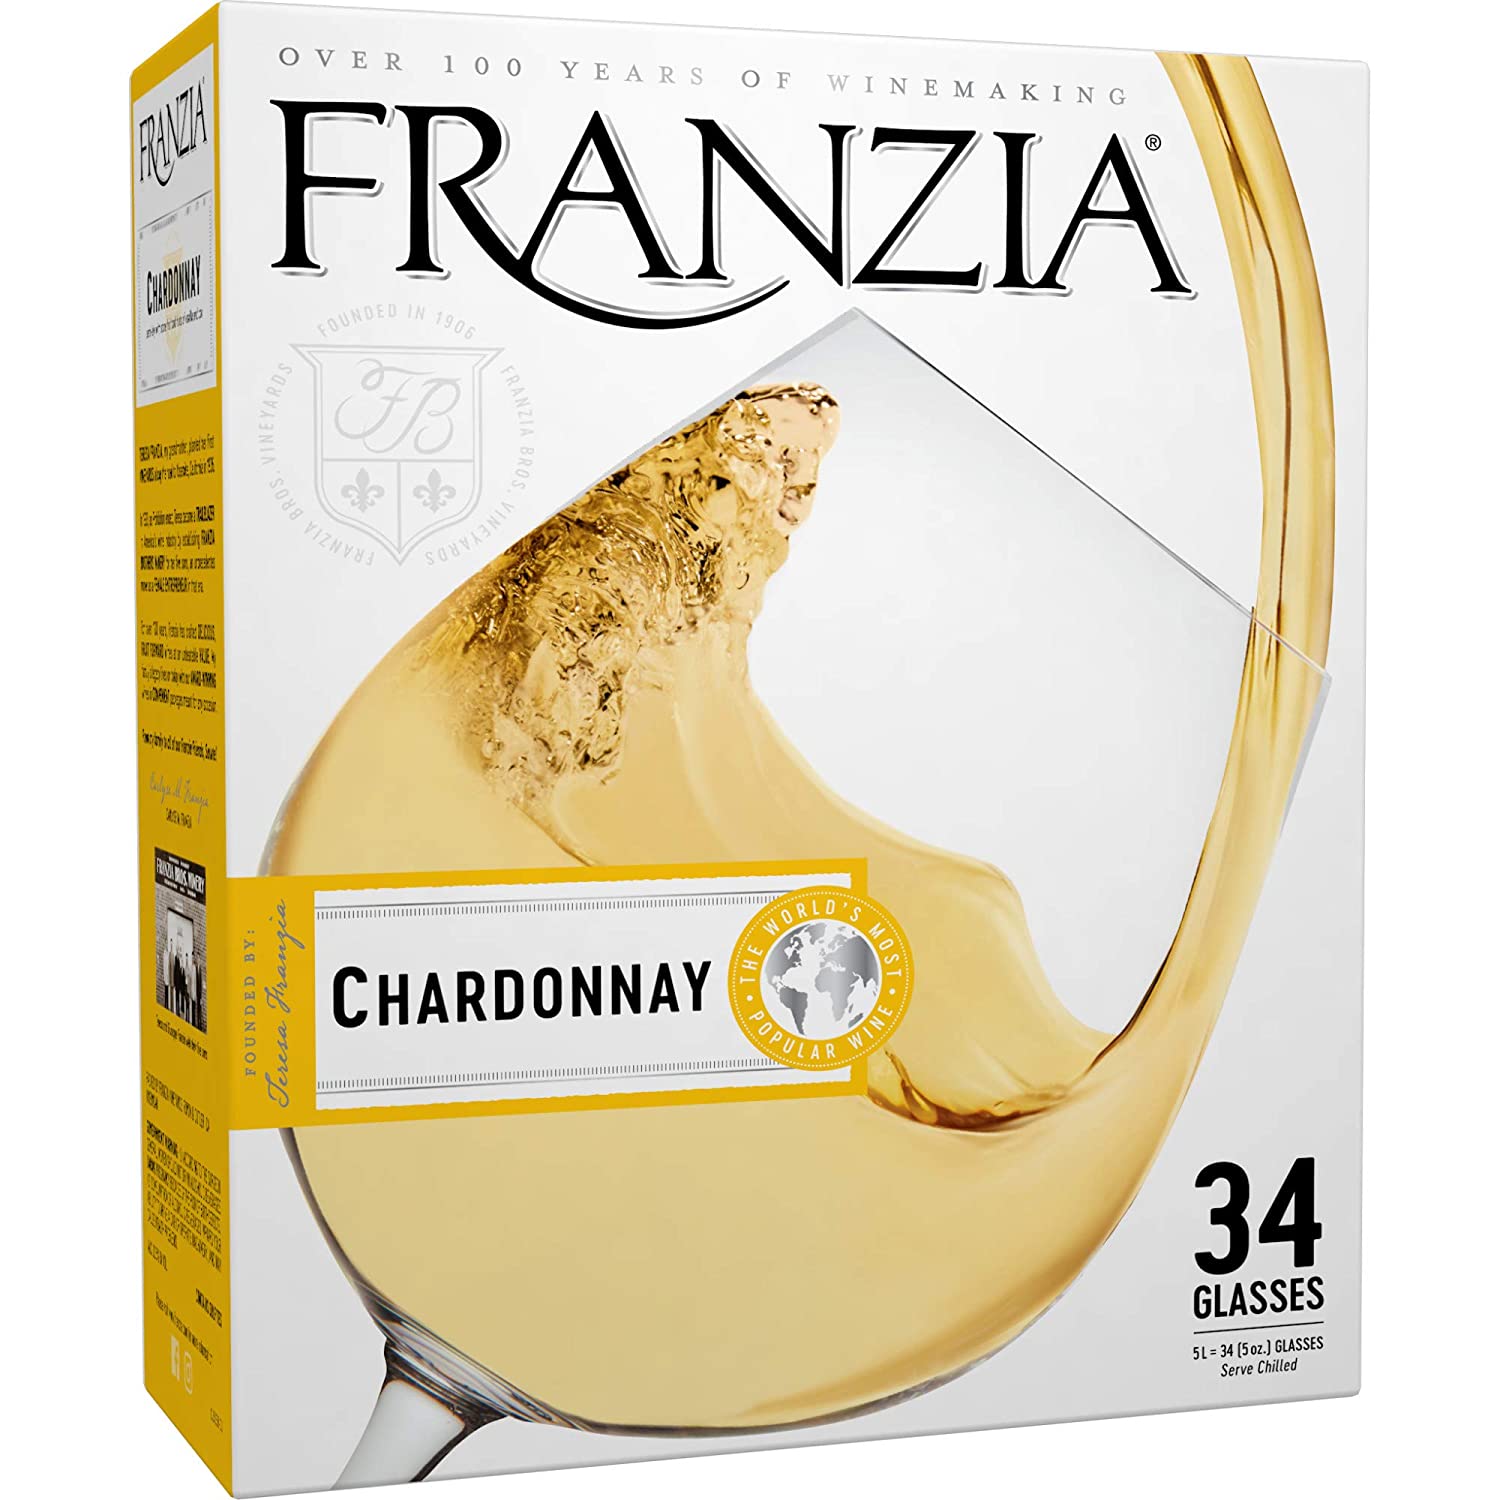 A box of Franzia chardonnay wine